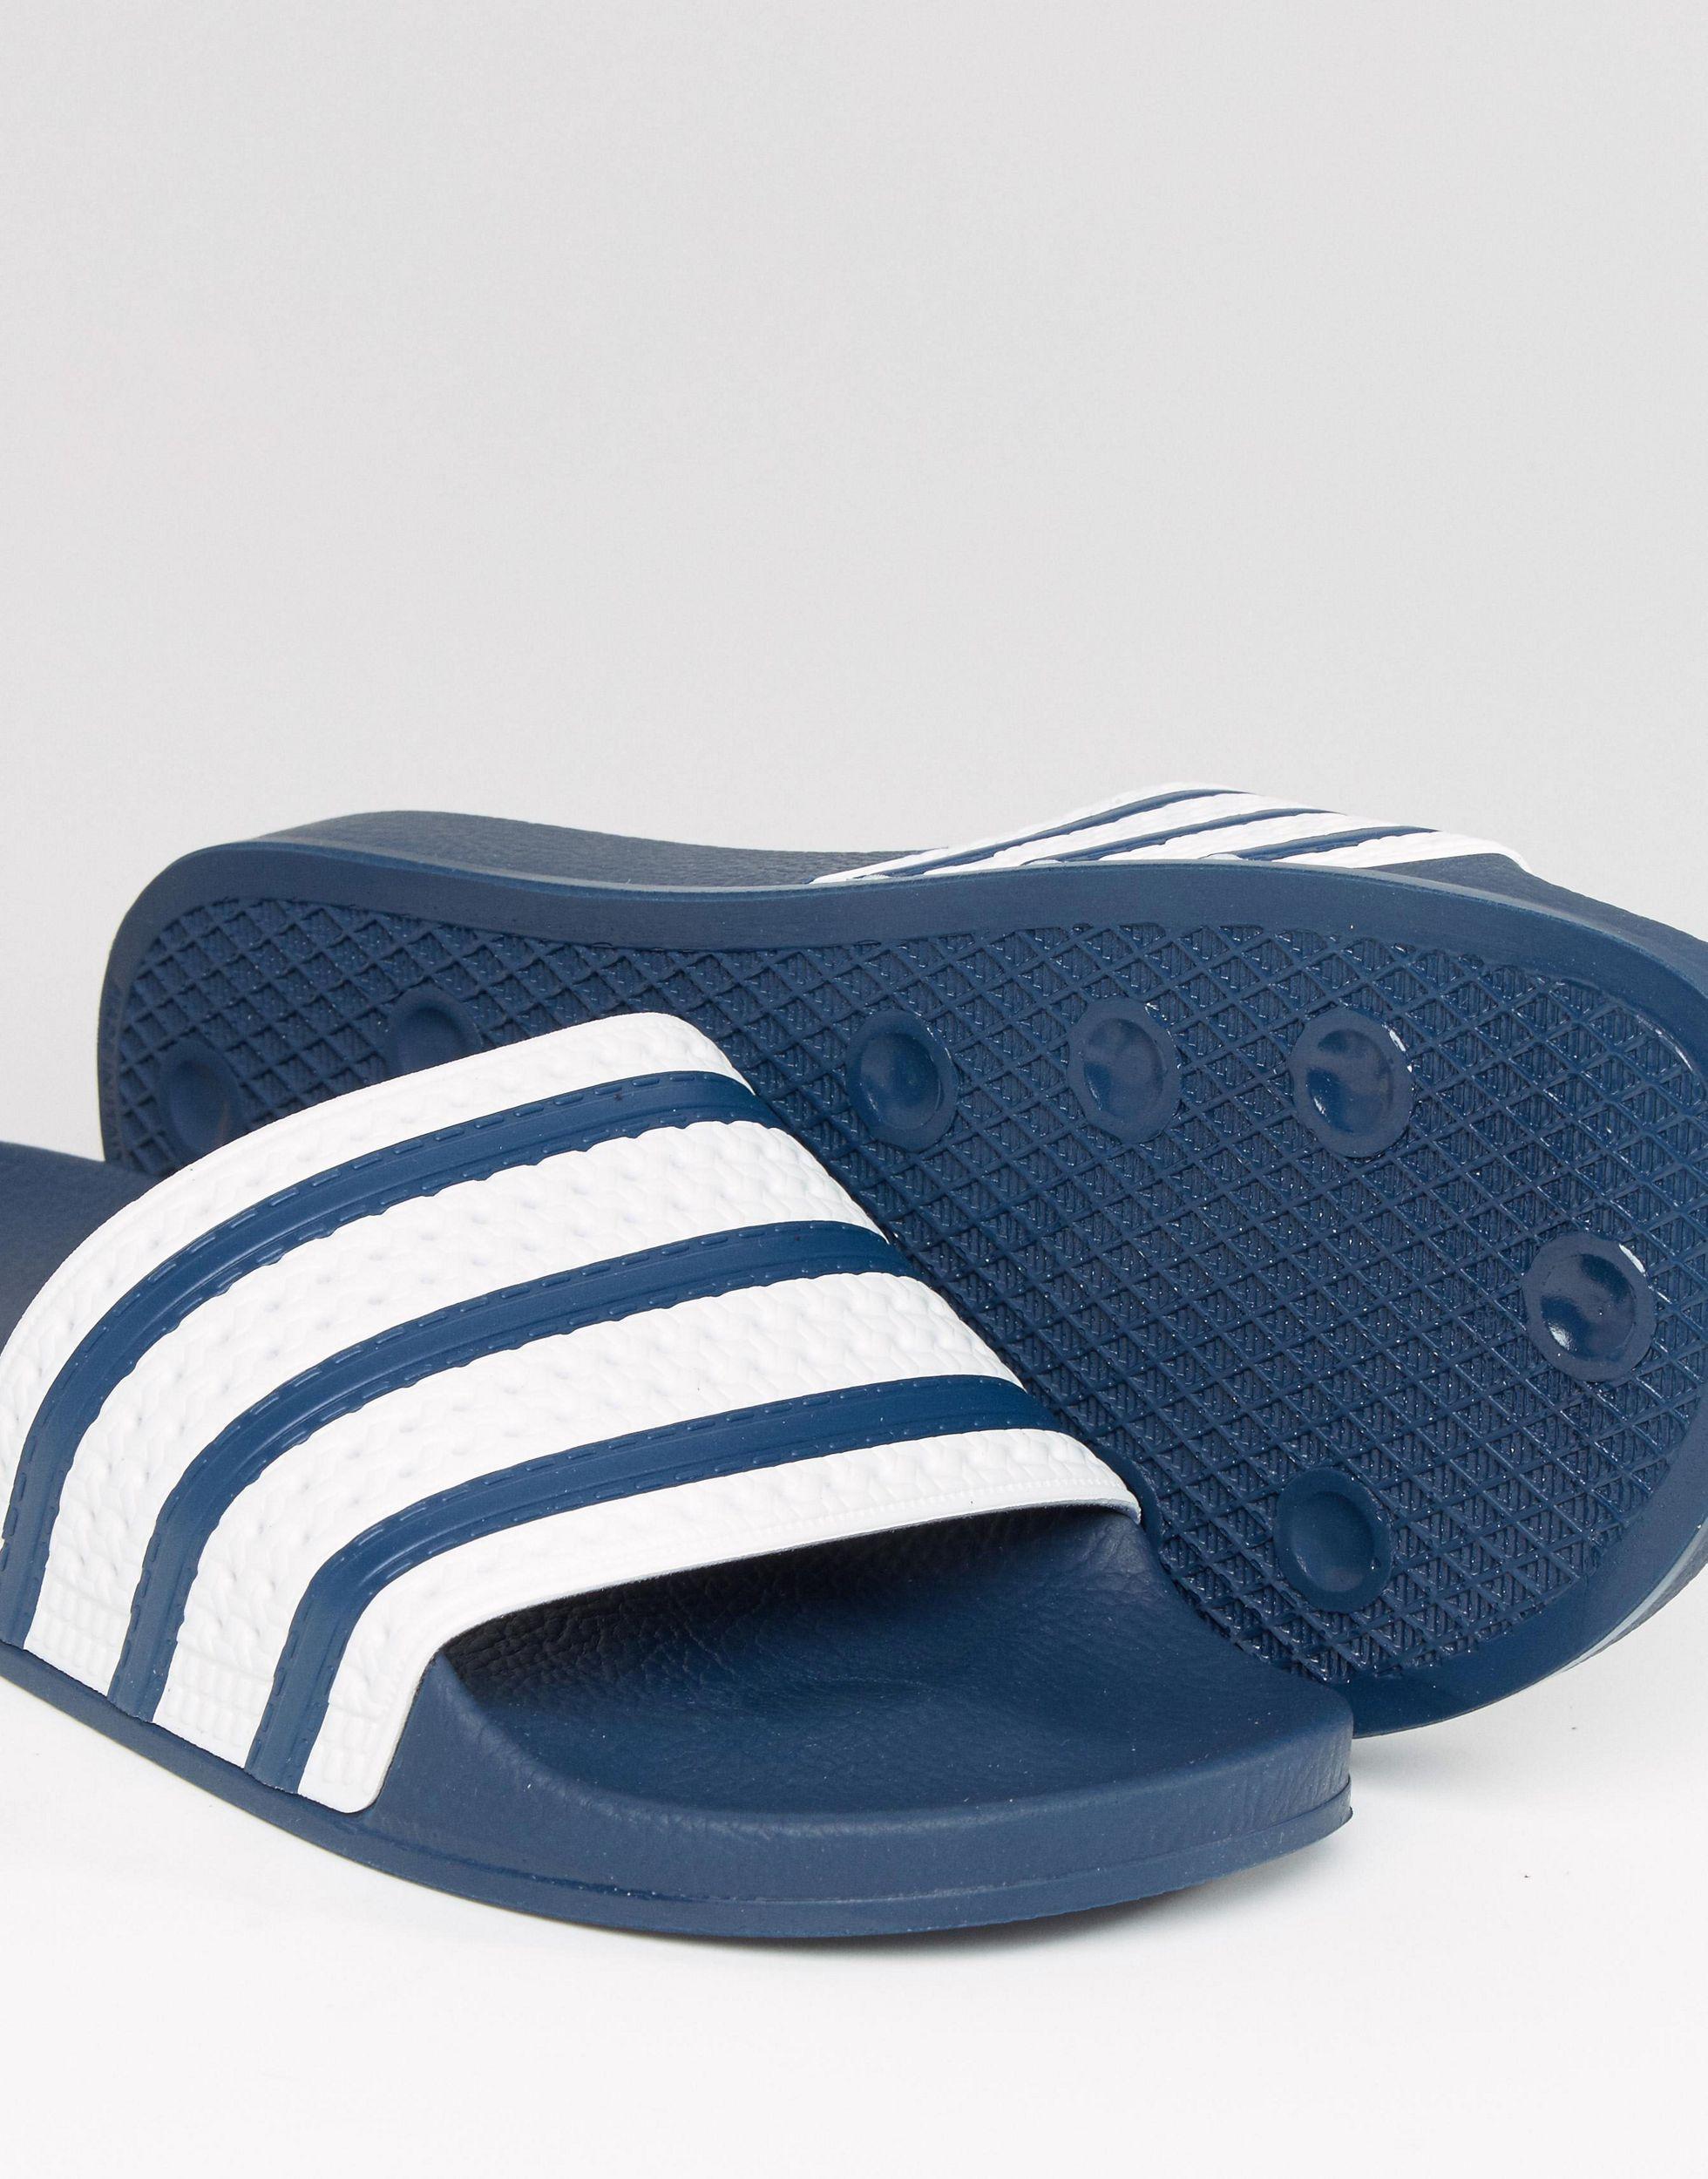 adidas Originals Adilette Sliders G16220 in Blue for Men - Lyst